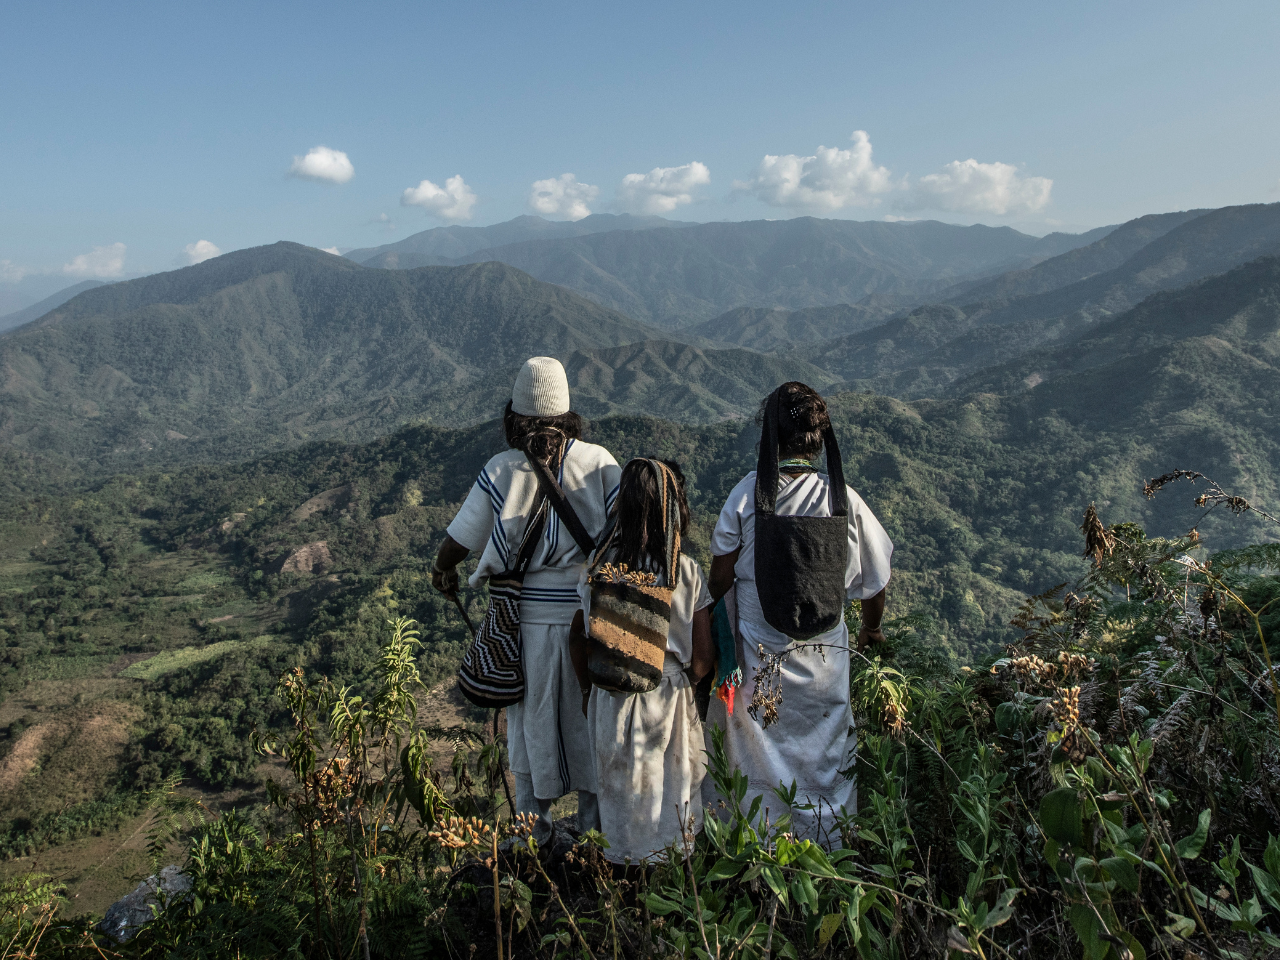 Three Kogi Indians looking at the mountains.